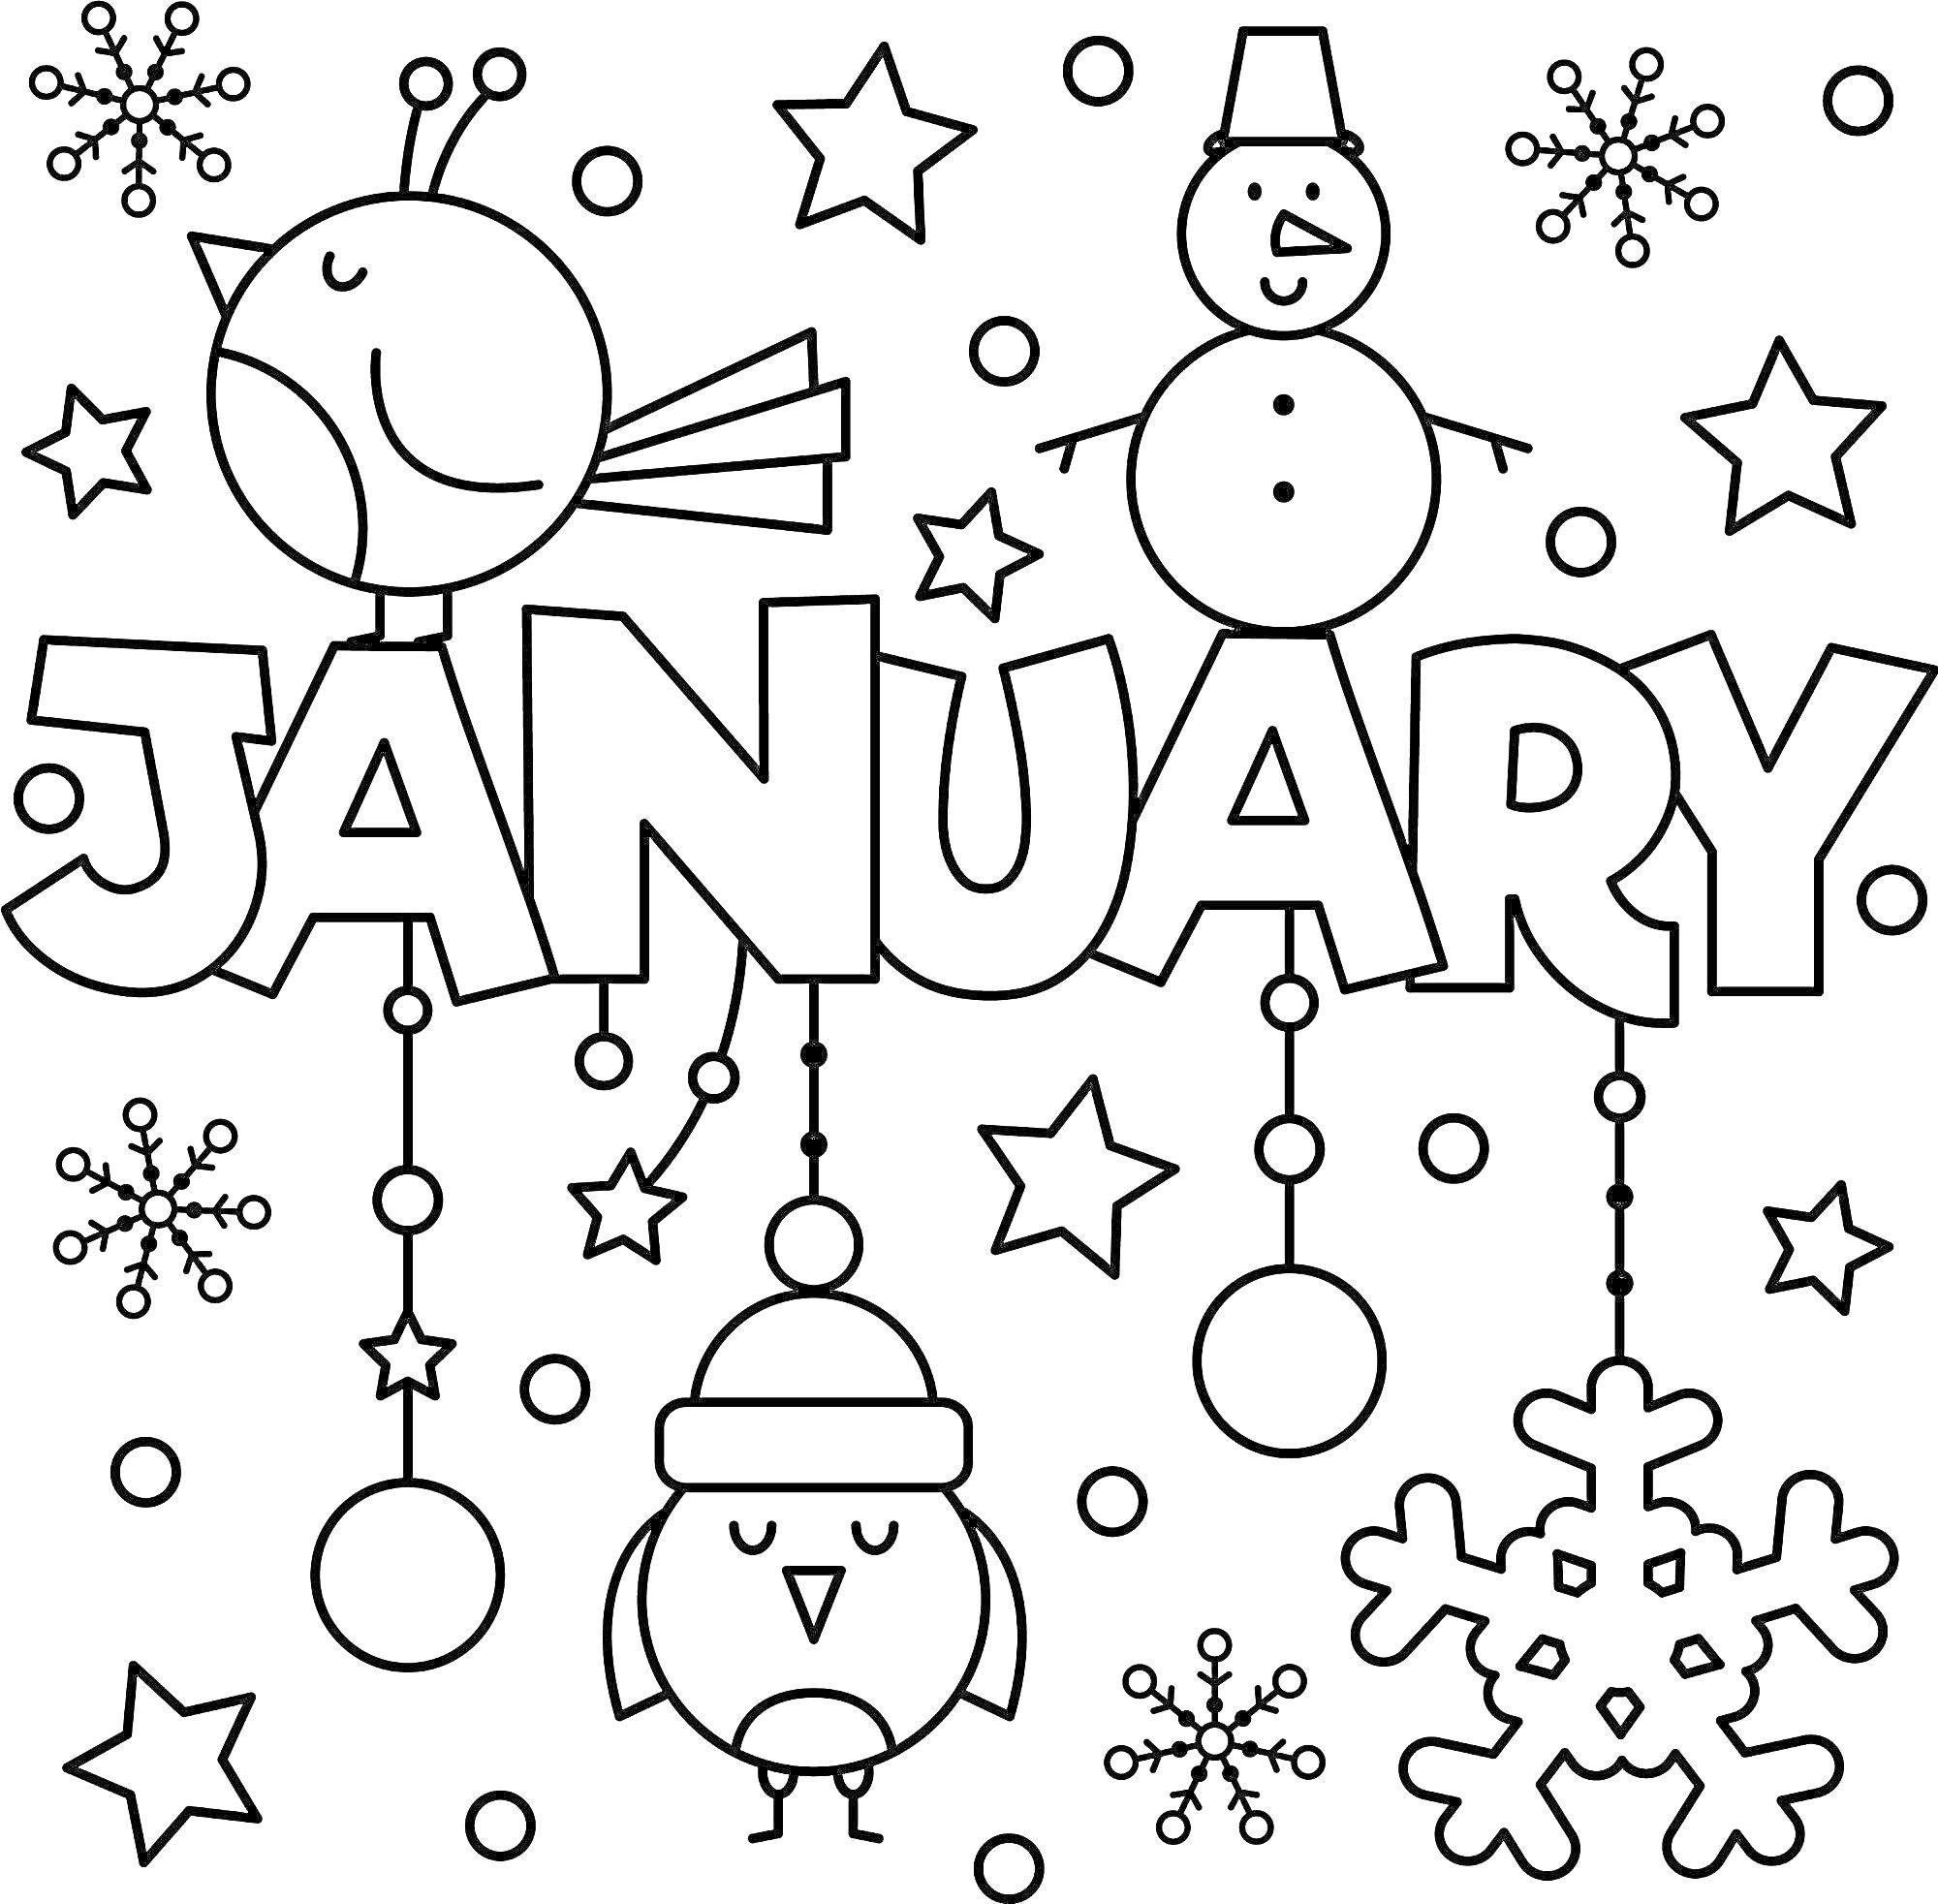 Январь, снеговик, птицы, снежинки, звёзды, шары